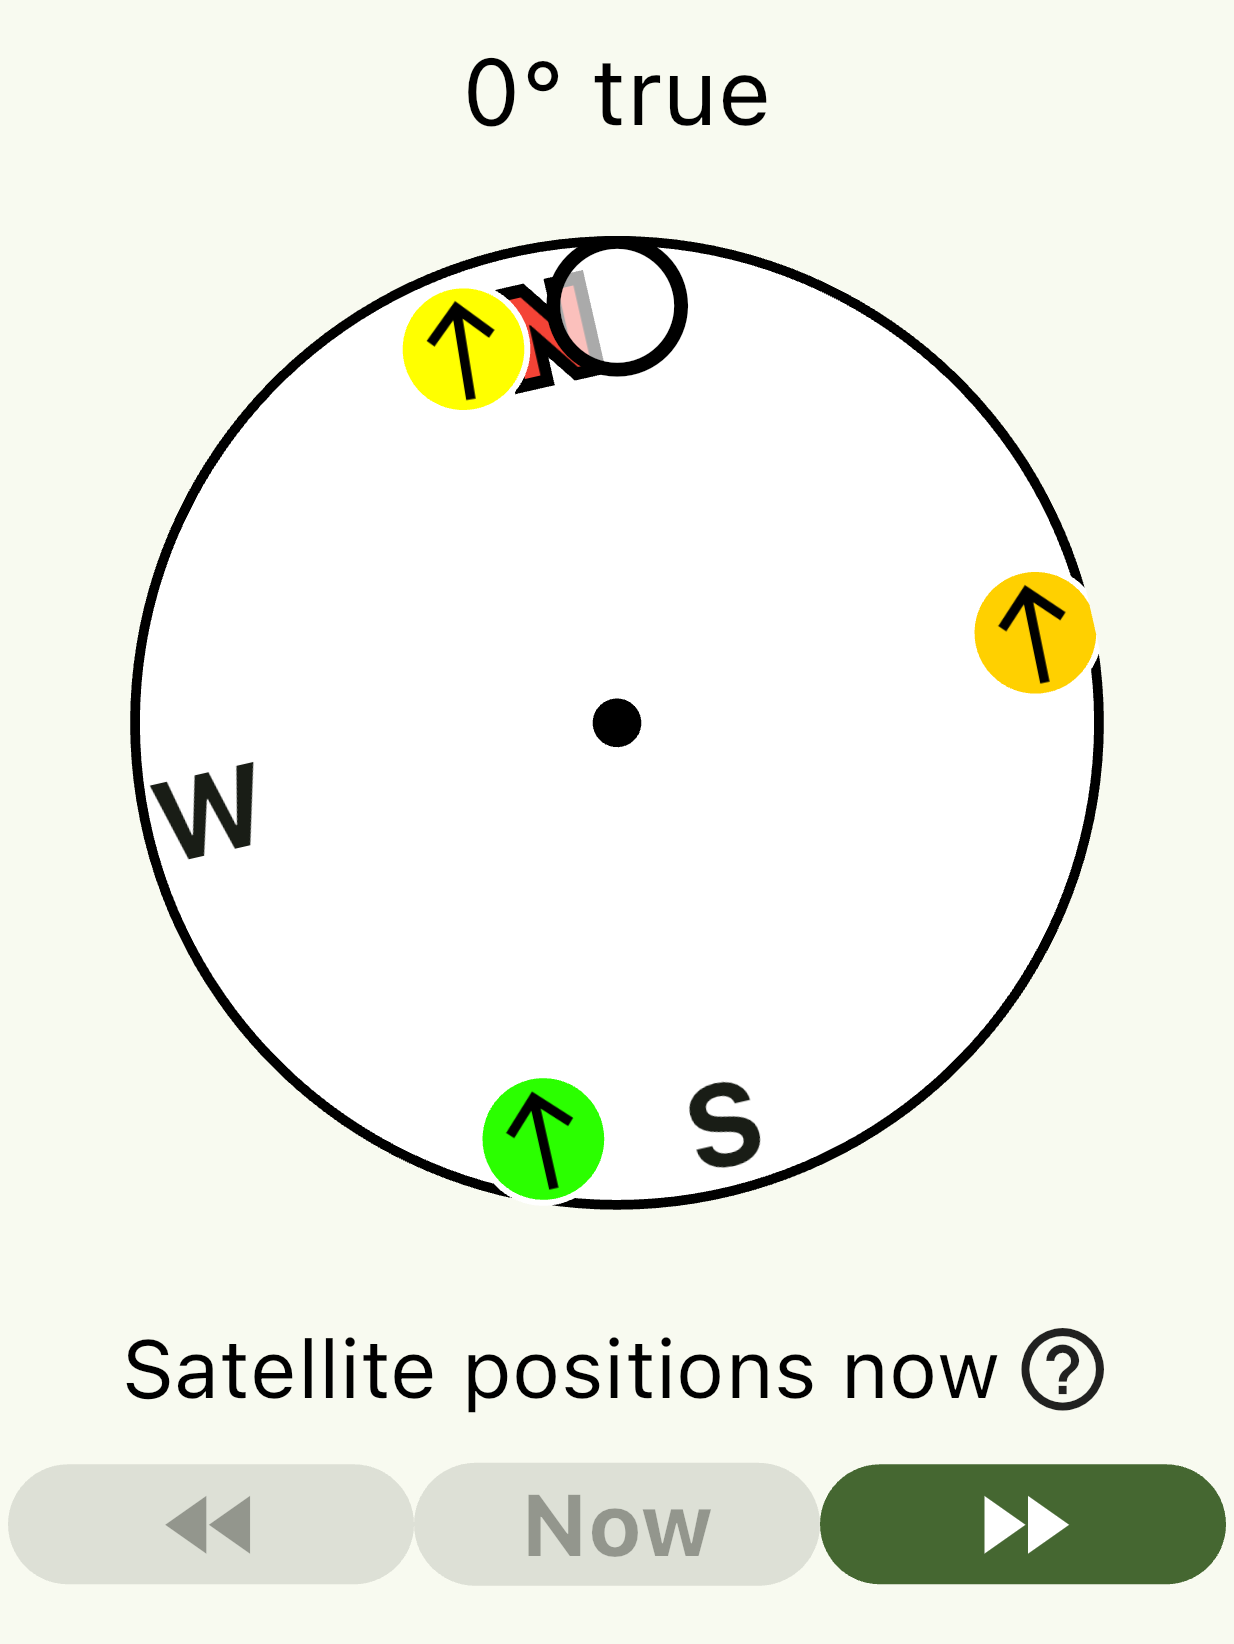 App view of satellite locations